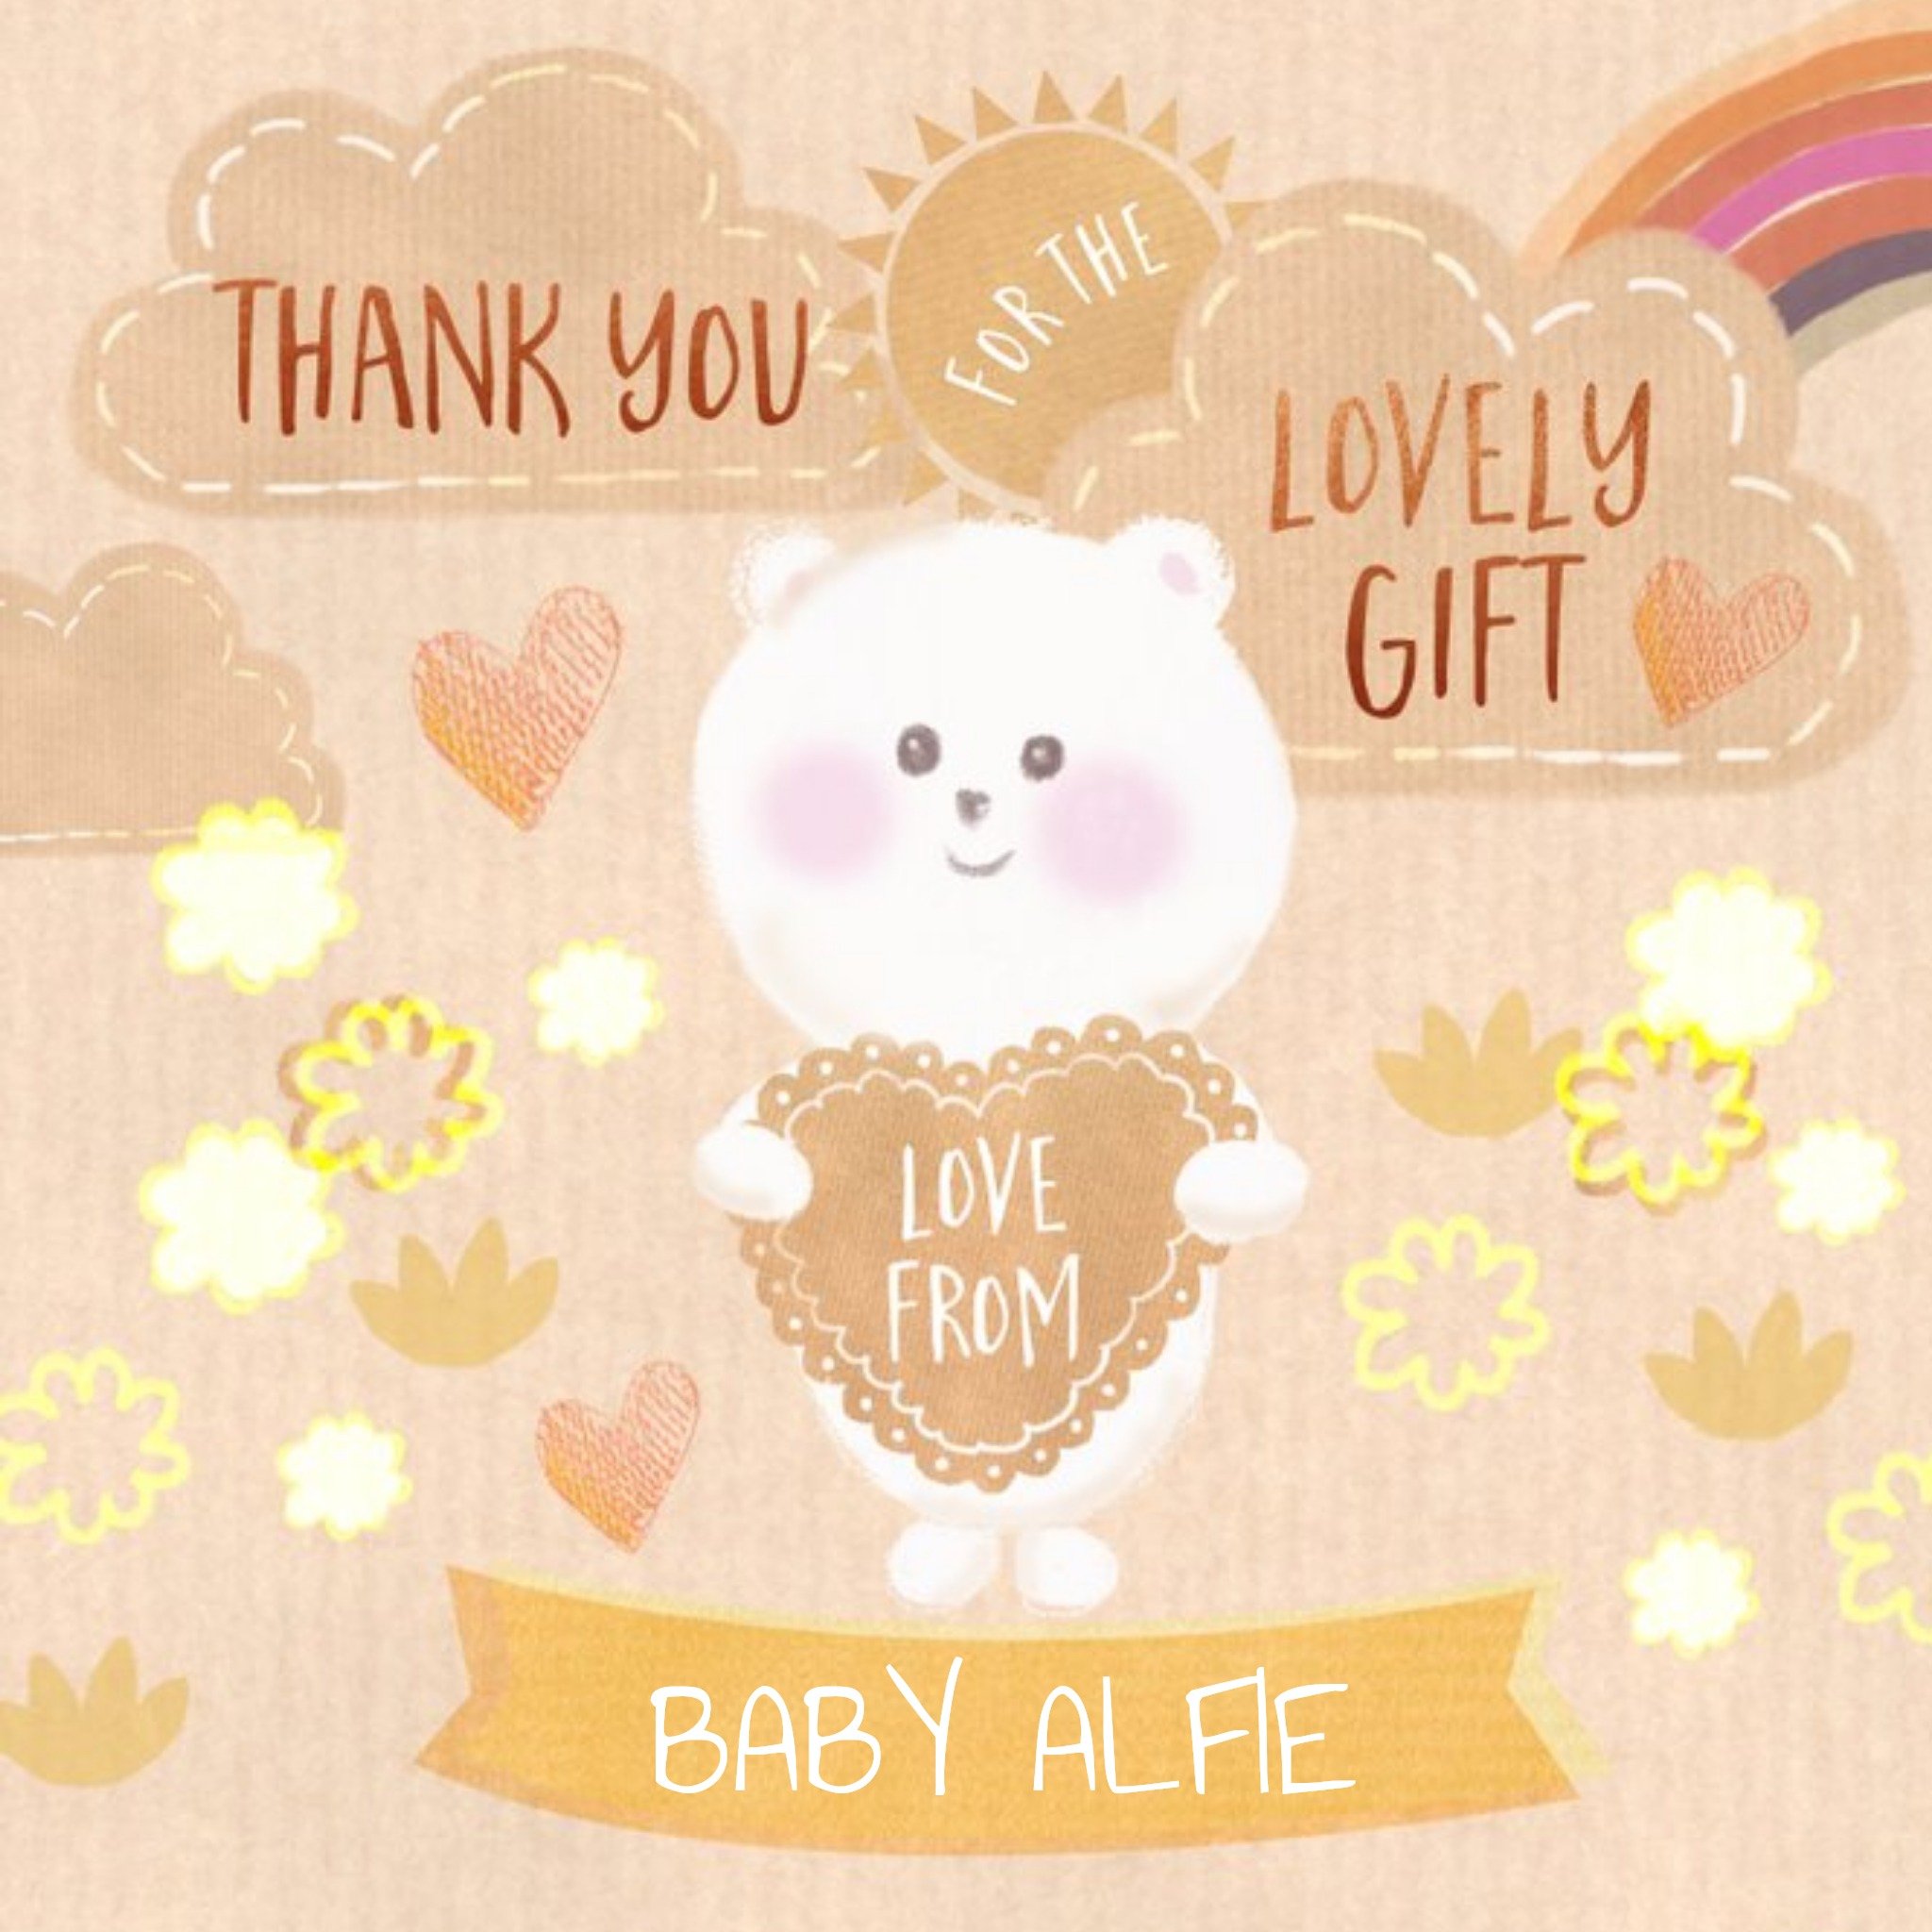 Moonpig Catherine Worsley Cartoon Bear Clouds Sun Rainbow Gift Cute Thank You Card, Square